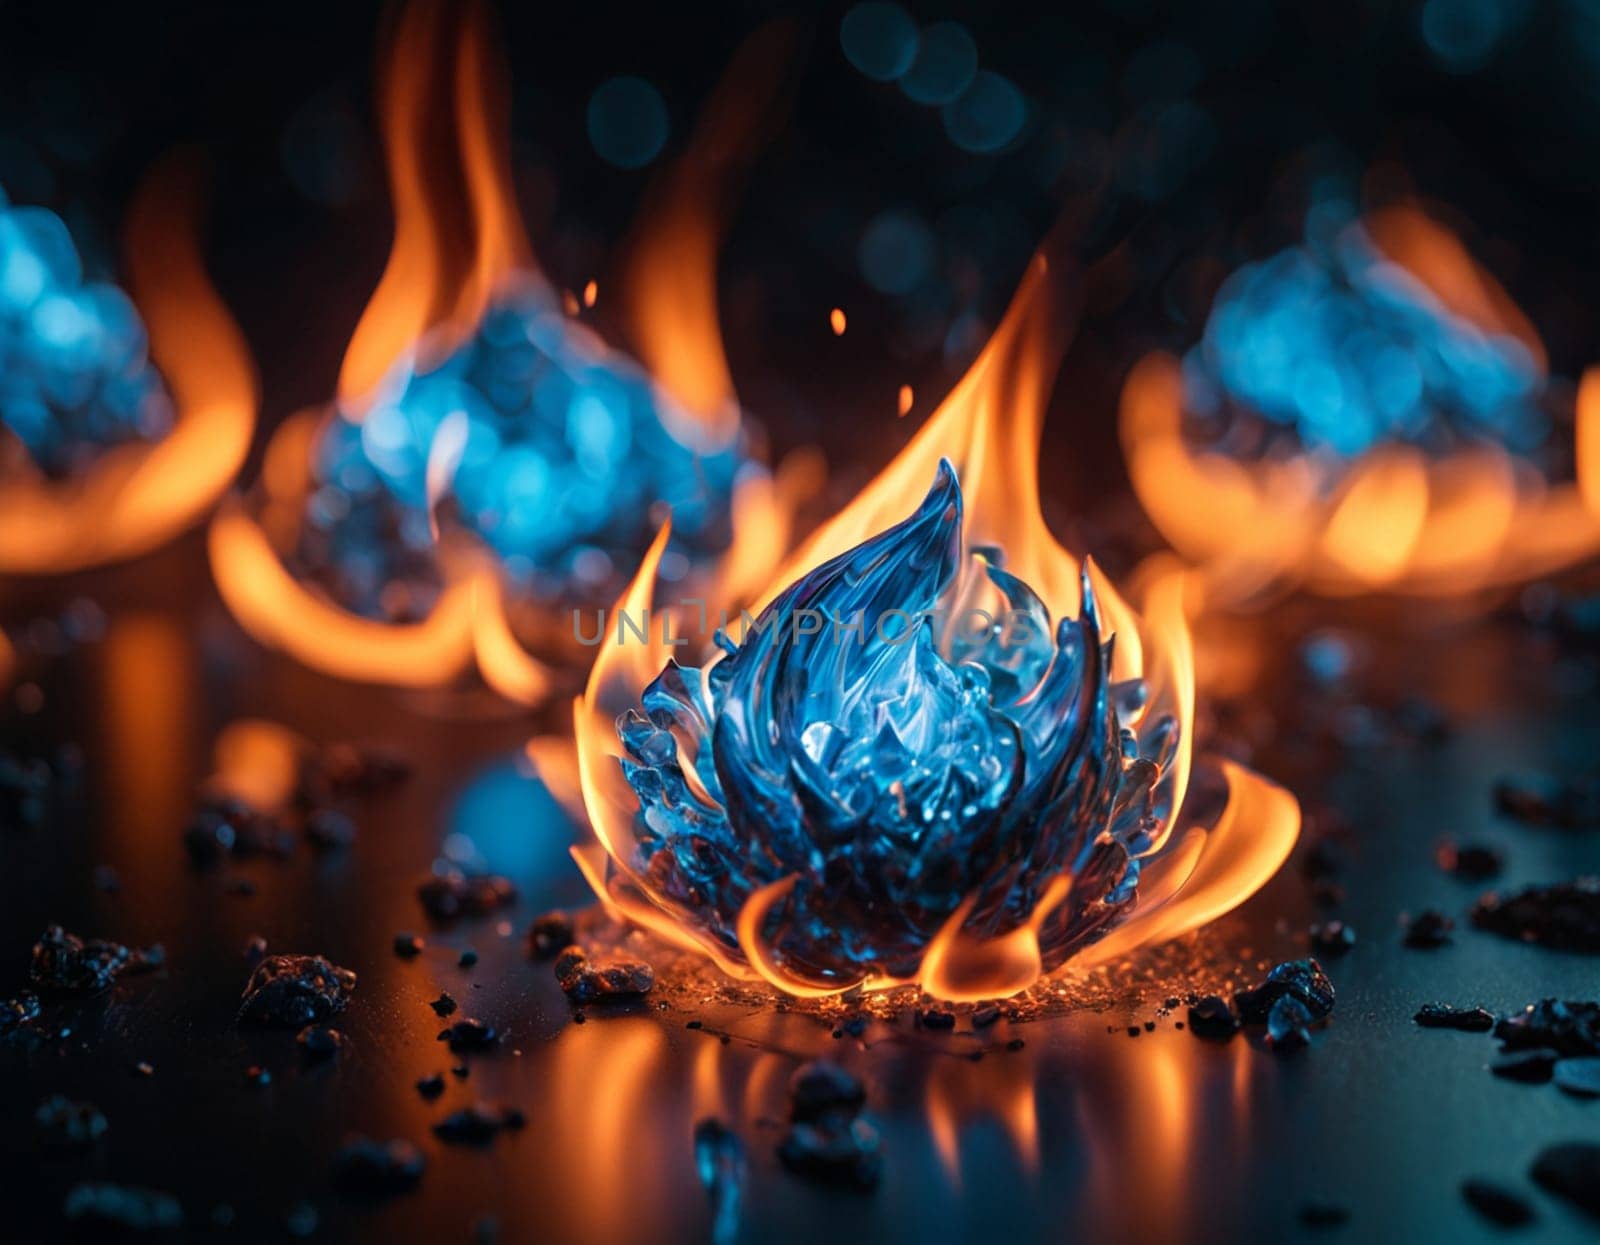 Magic Flower on fire by NeuroSky